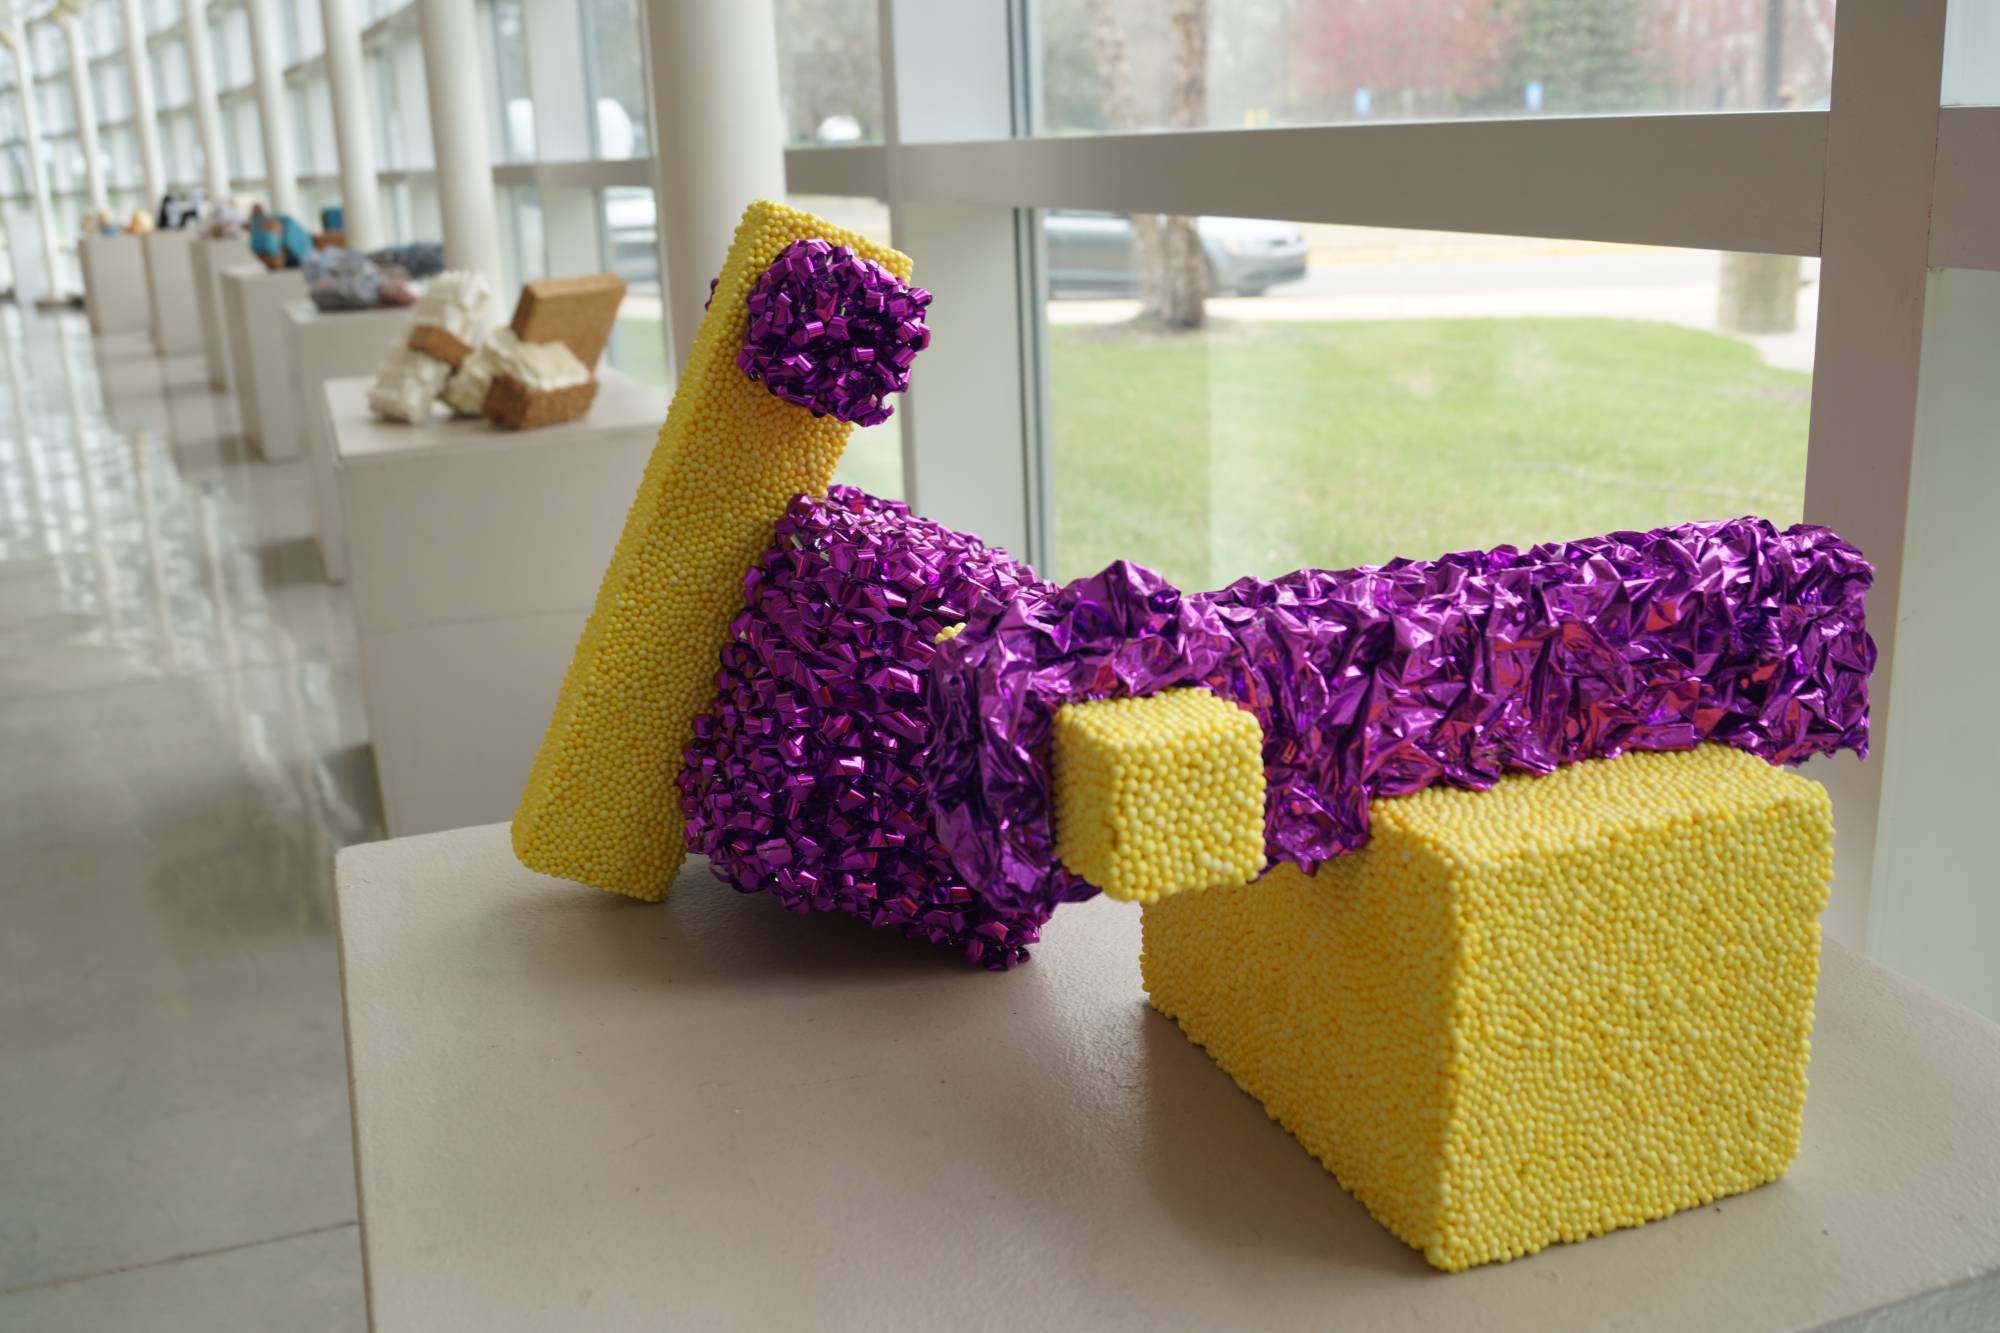 3D Design student Work on display in the Calder Arts Center